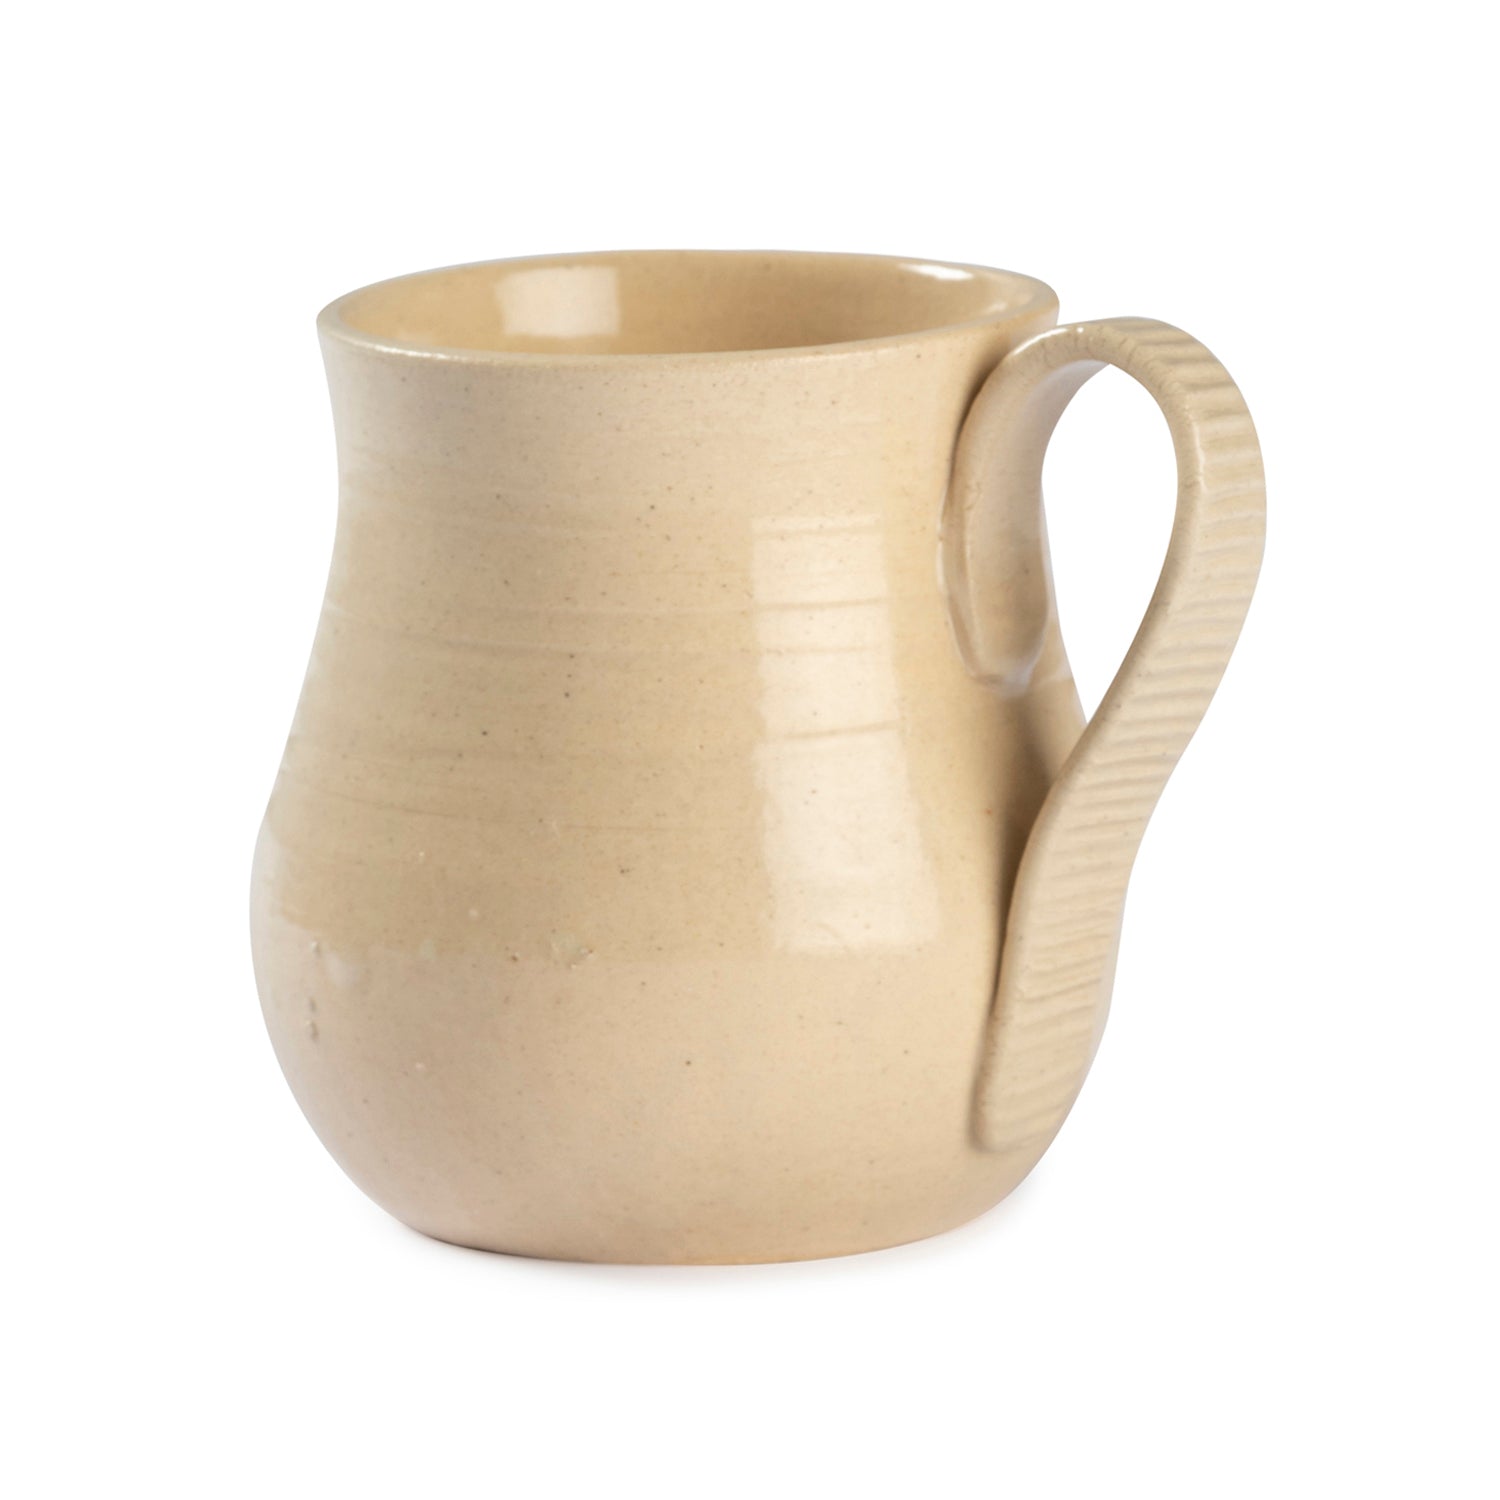 Stoneware Ceramic Mugs - Set of 2 - 3x4.5